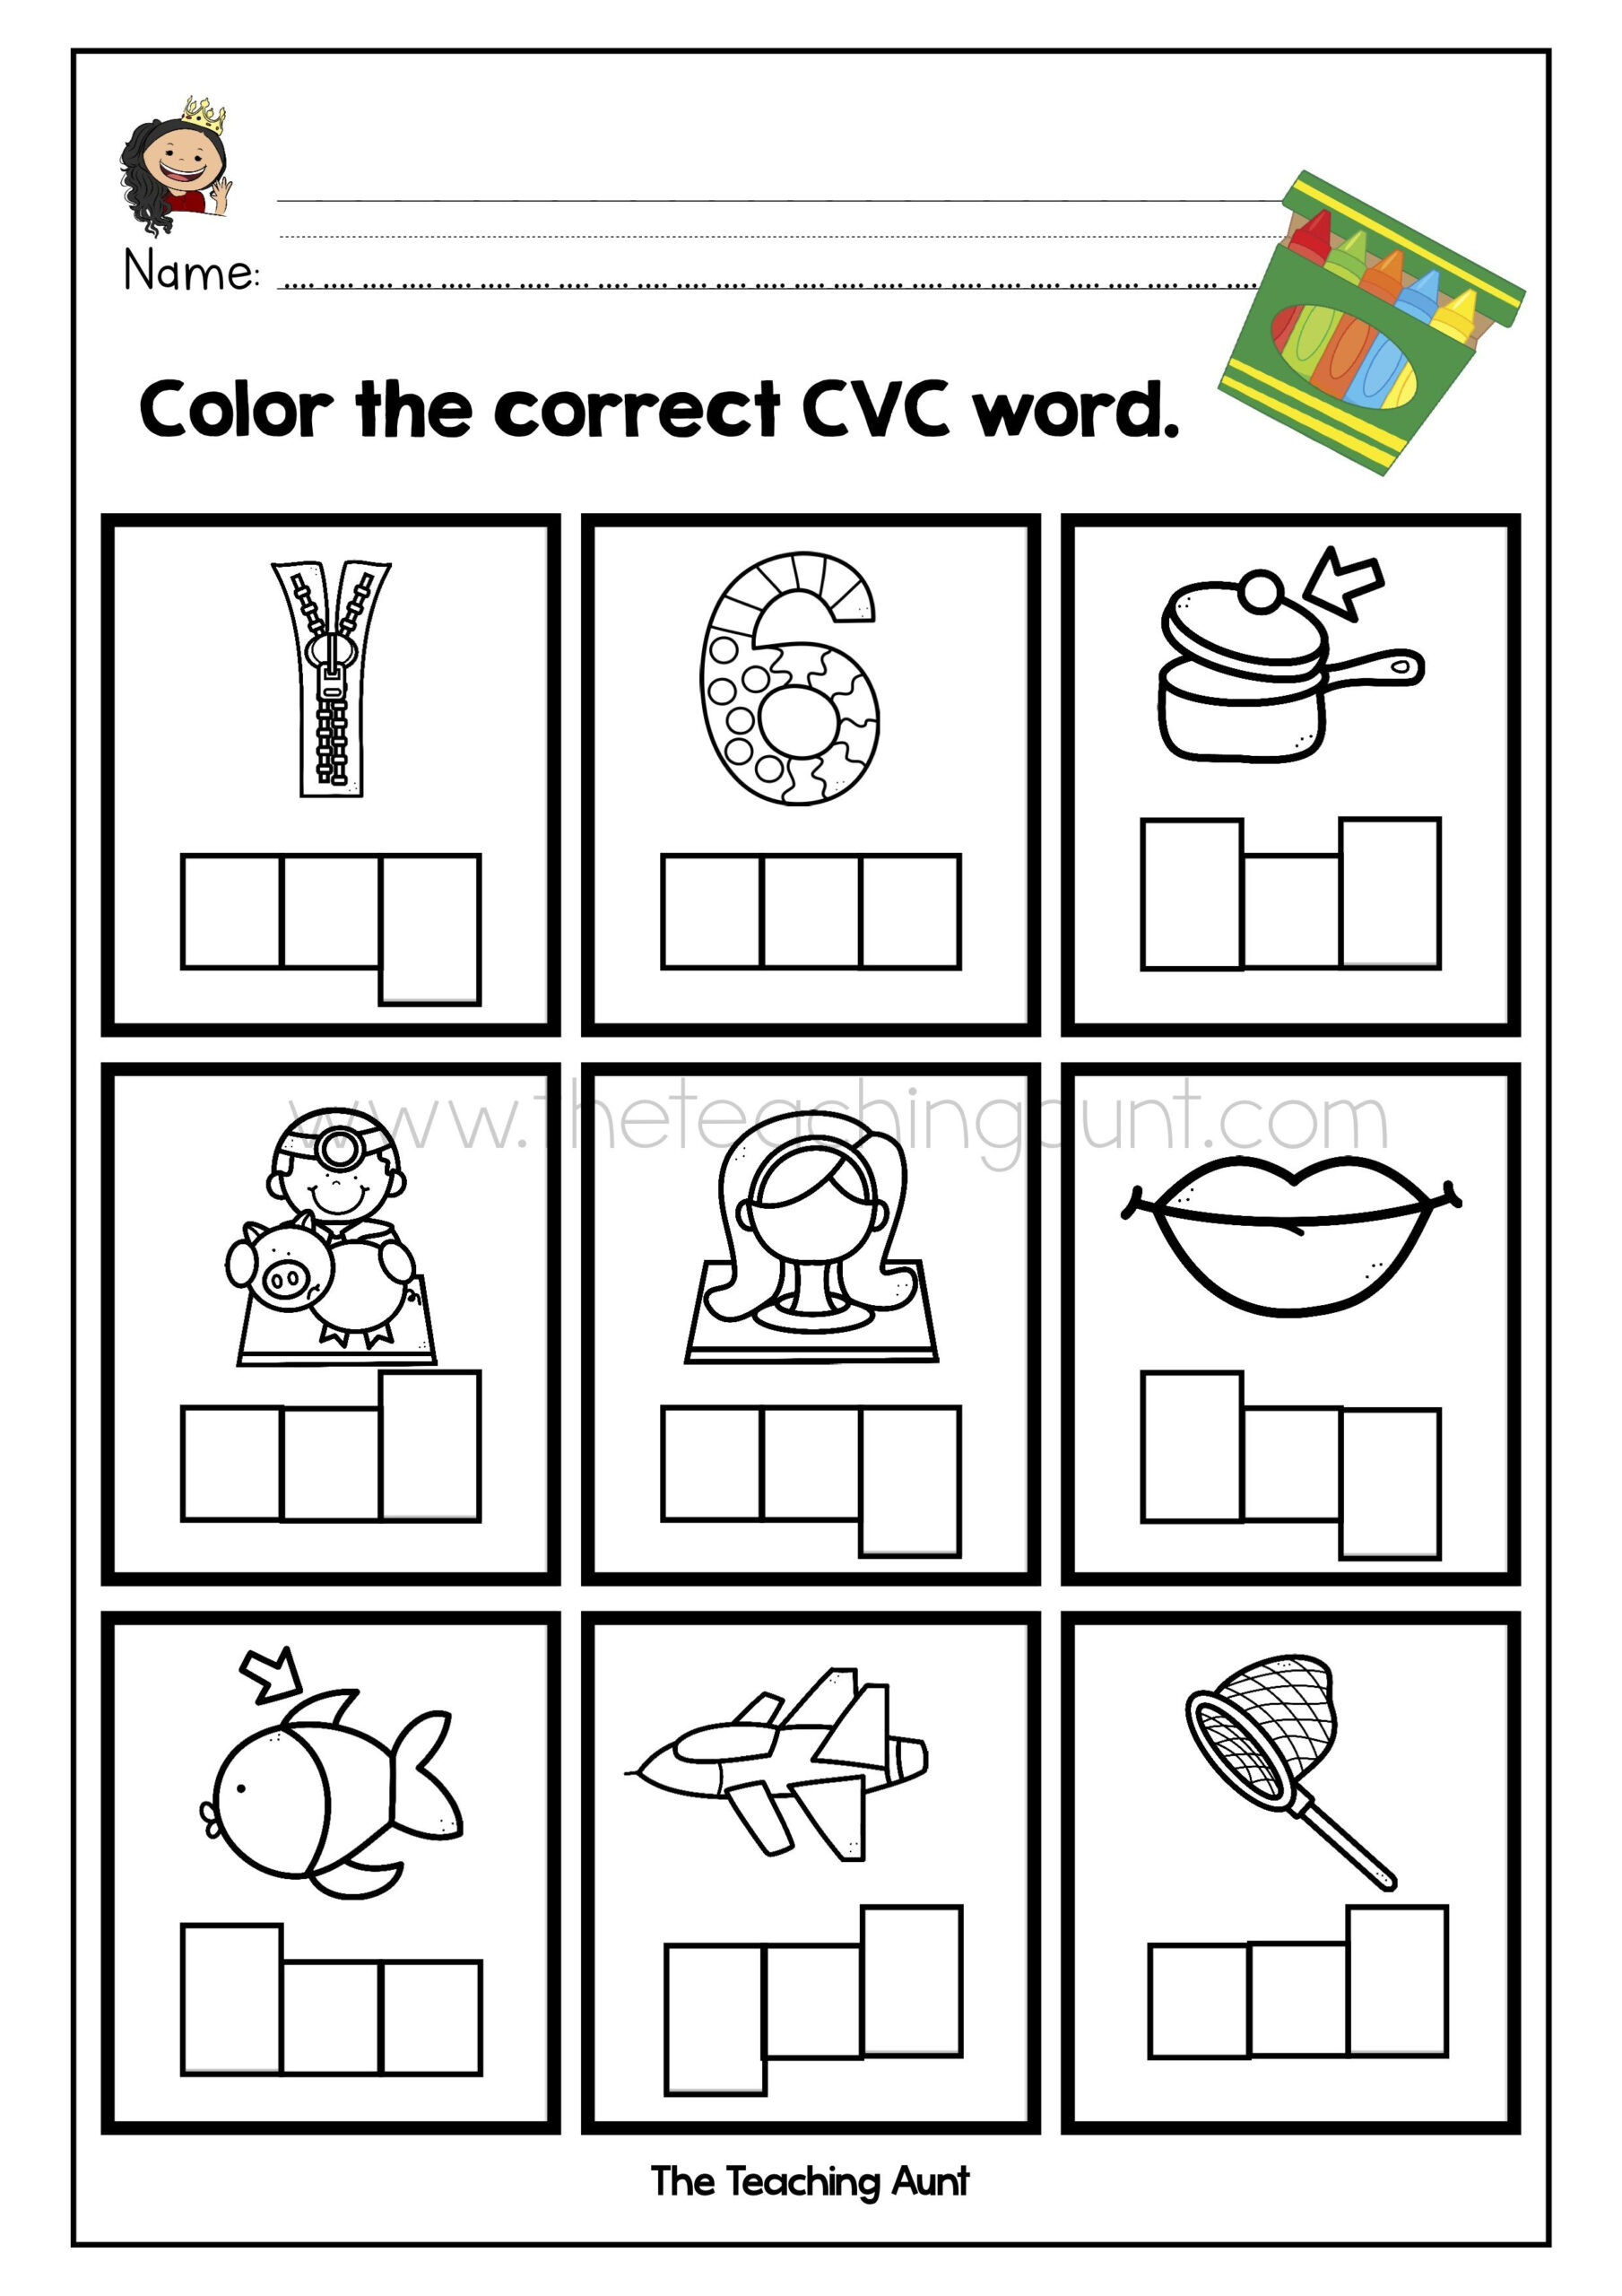 Cvc Words Worksheets For Kindergarten | Free Printable Worksheets pertaining to Cvc Words Worksheets Free Printable